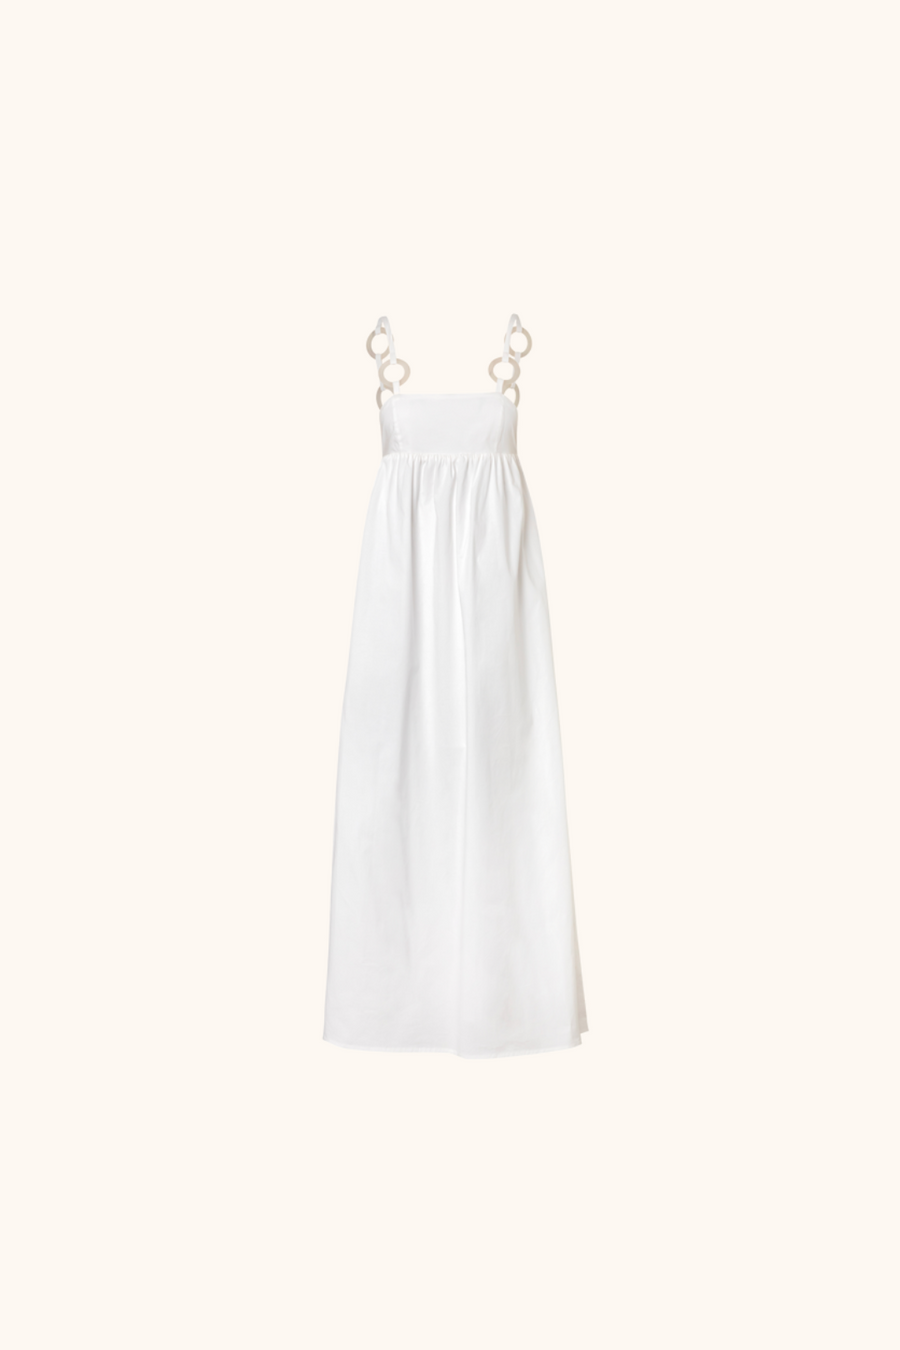 Bahama White Maxi Dress